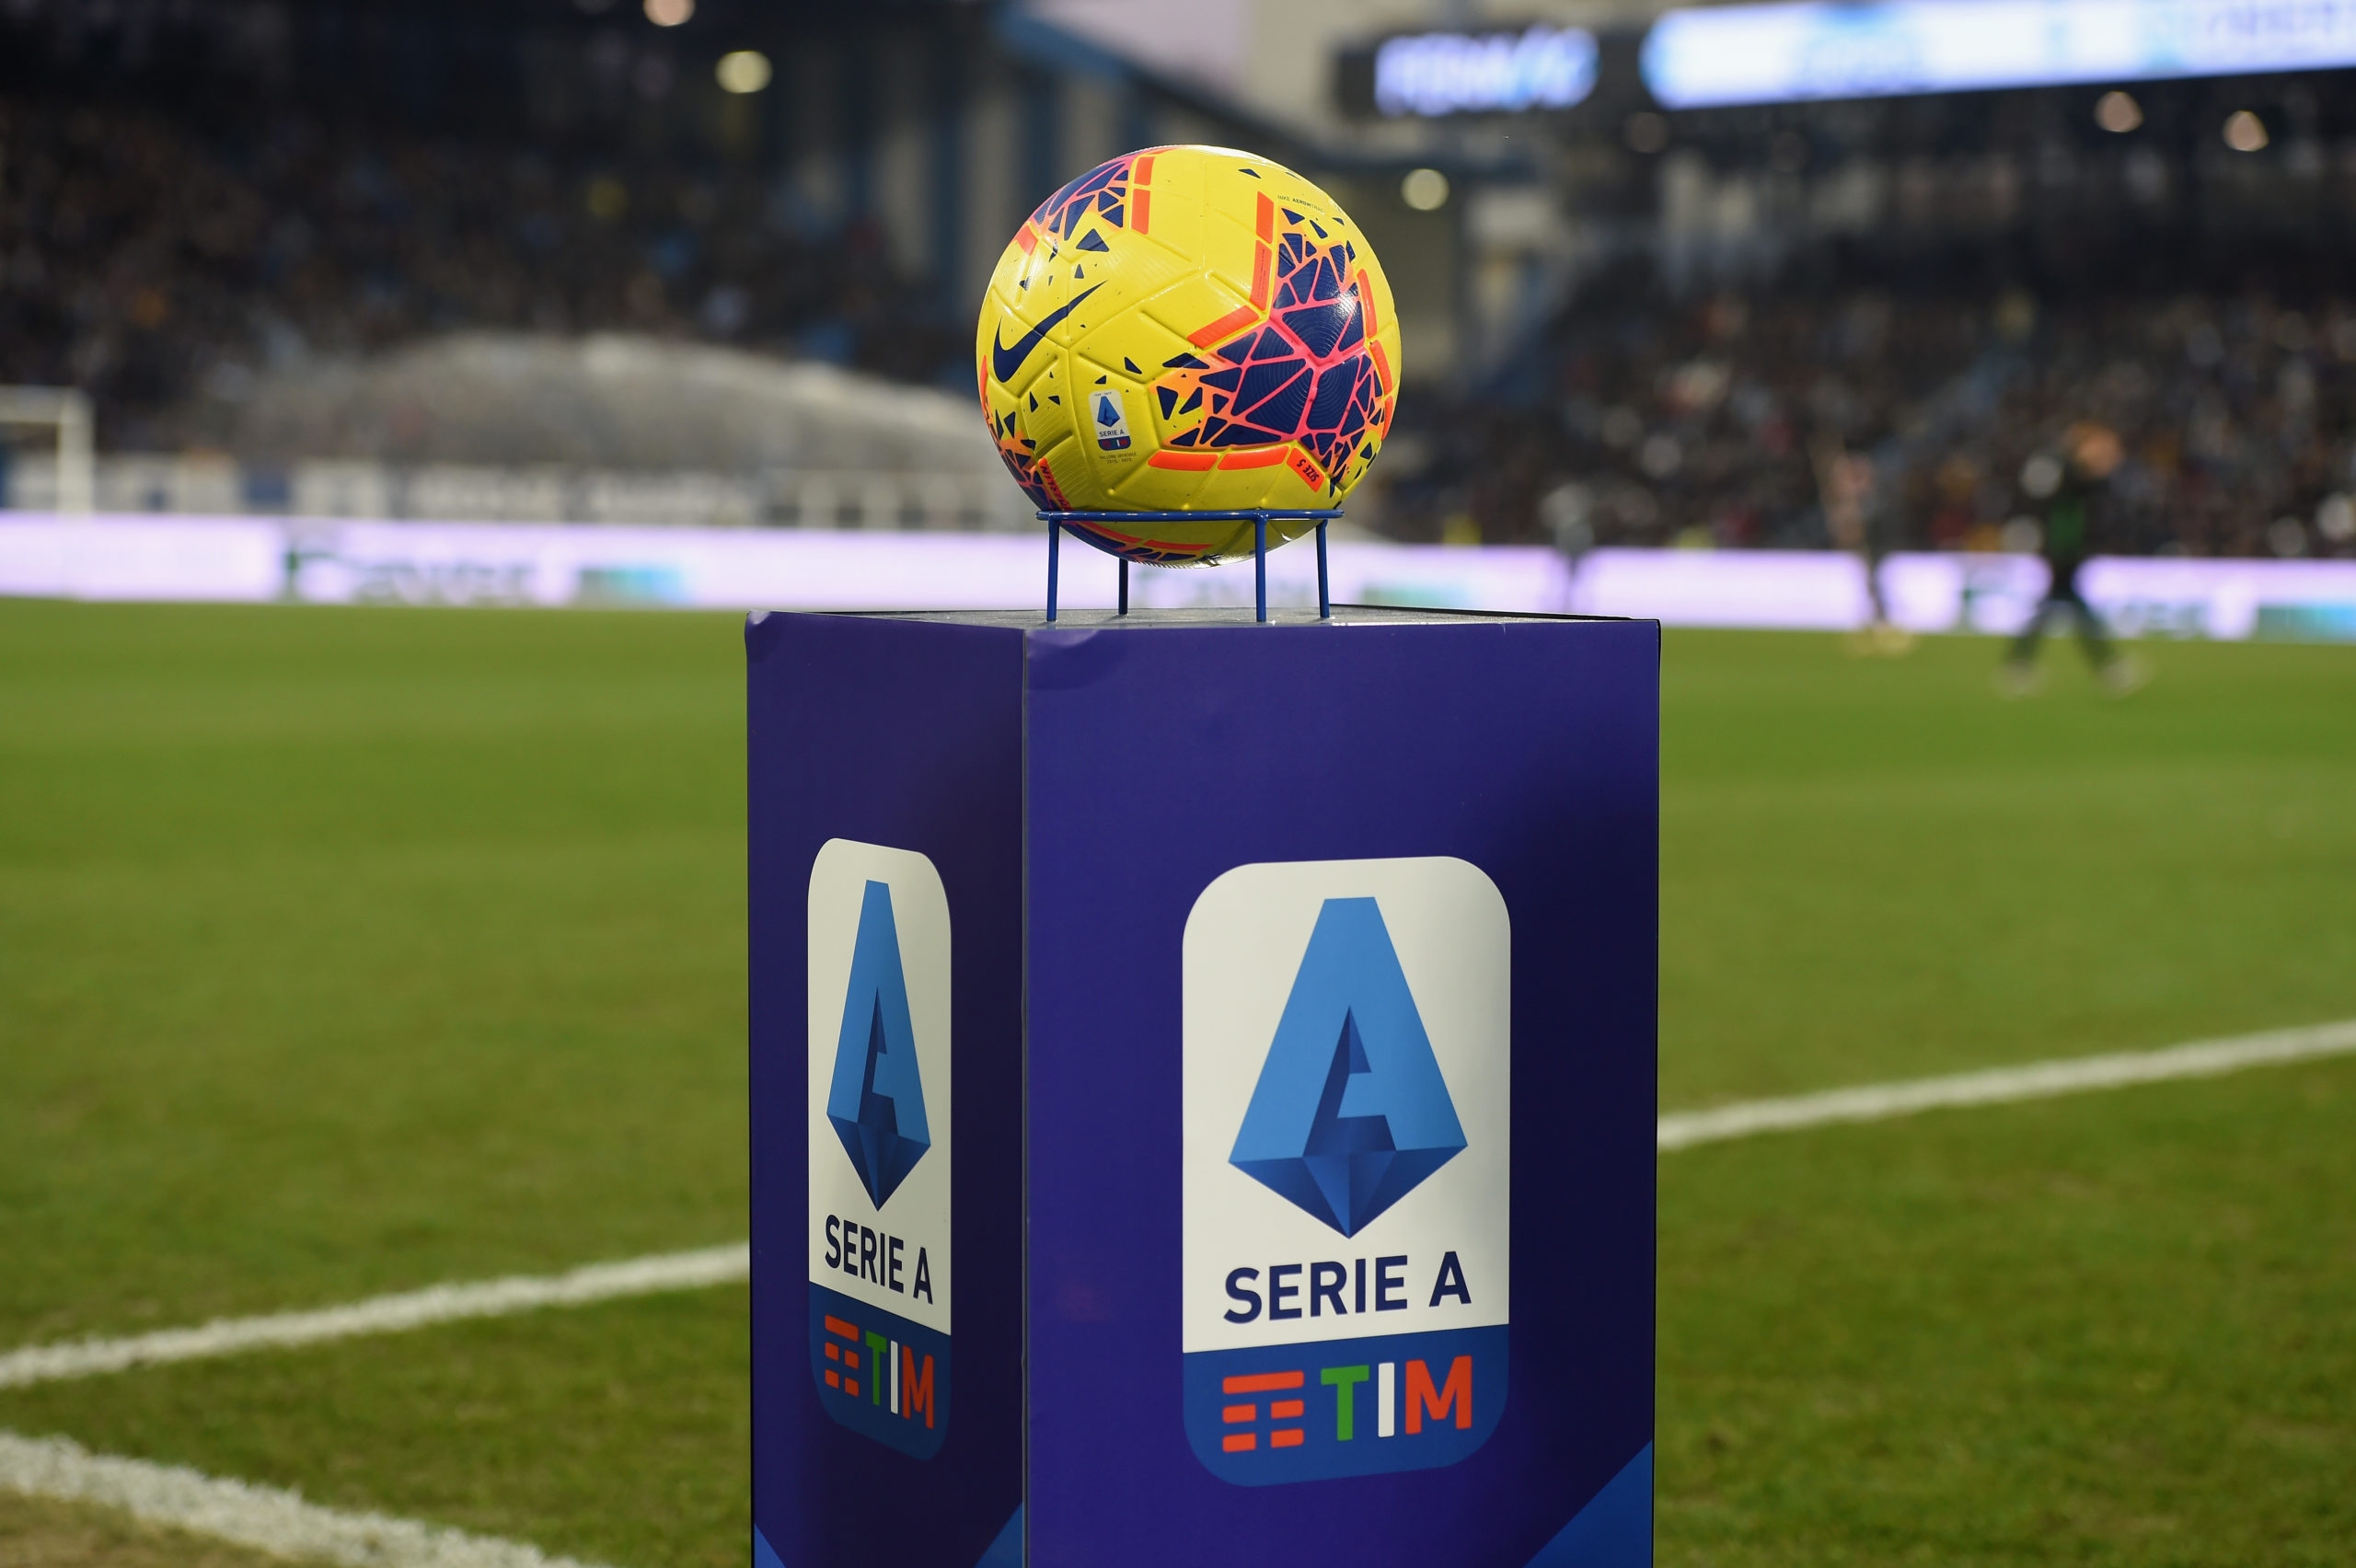 Серияа. Чемпионат Италии по футболу logo 2022.